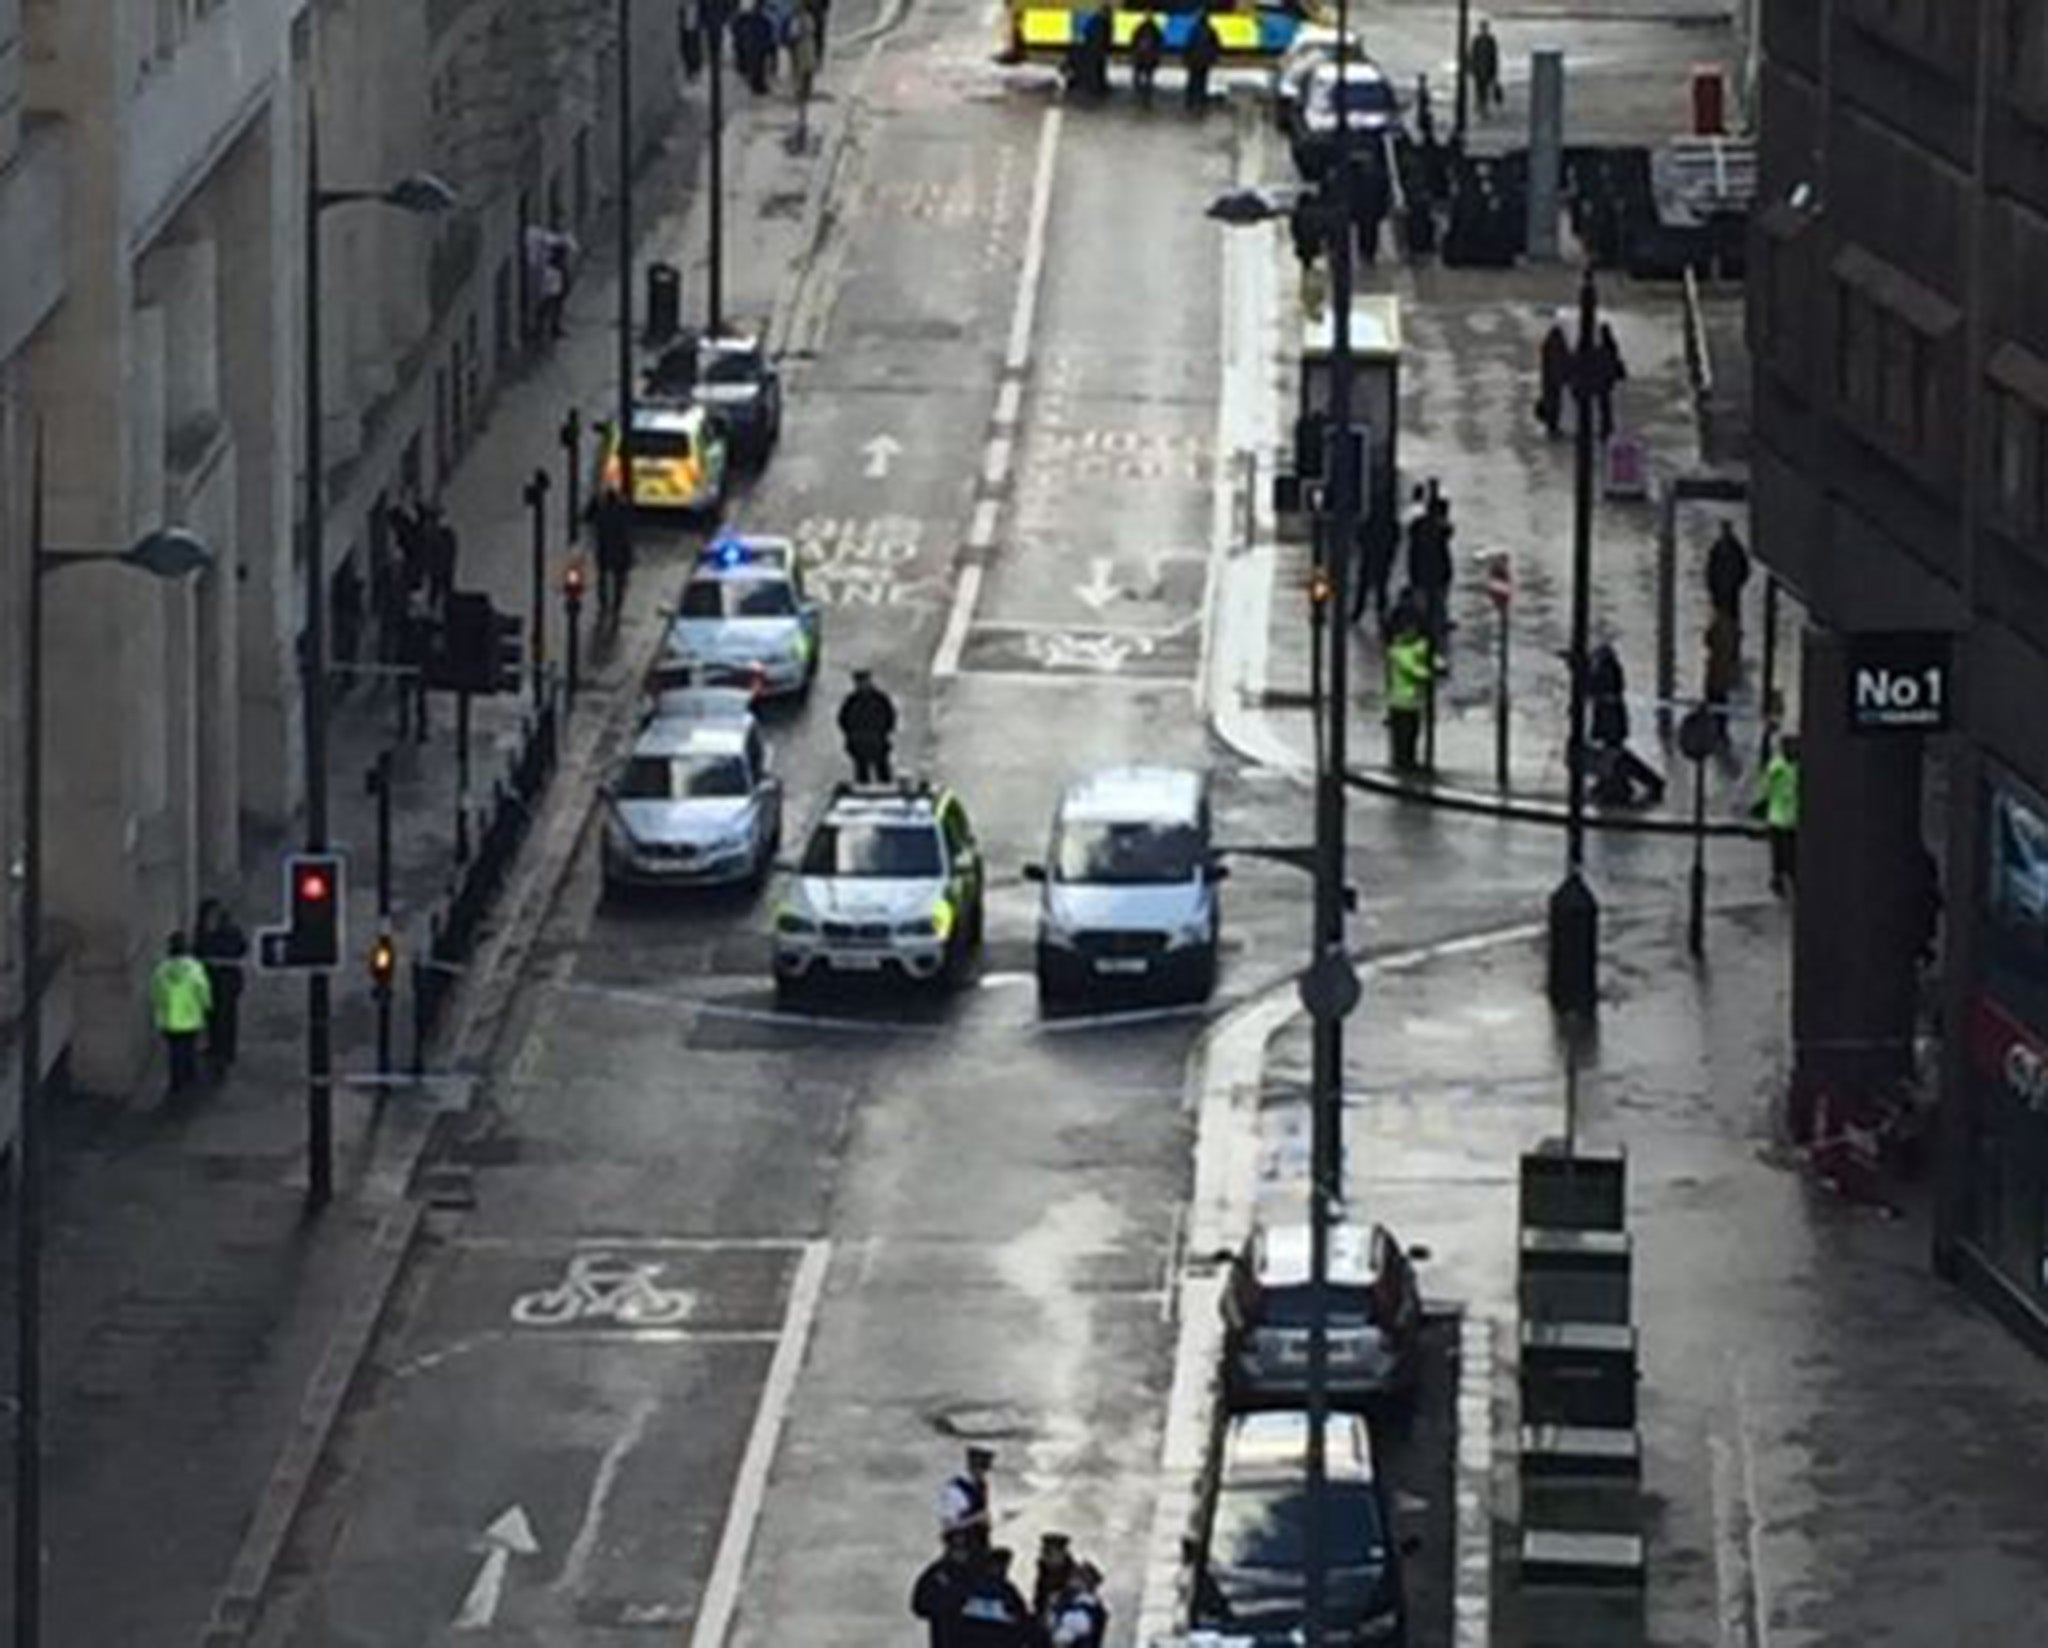 Police arrive on the scene in Tithebarn Street, Liverpool